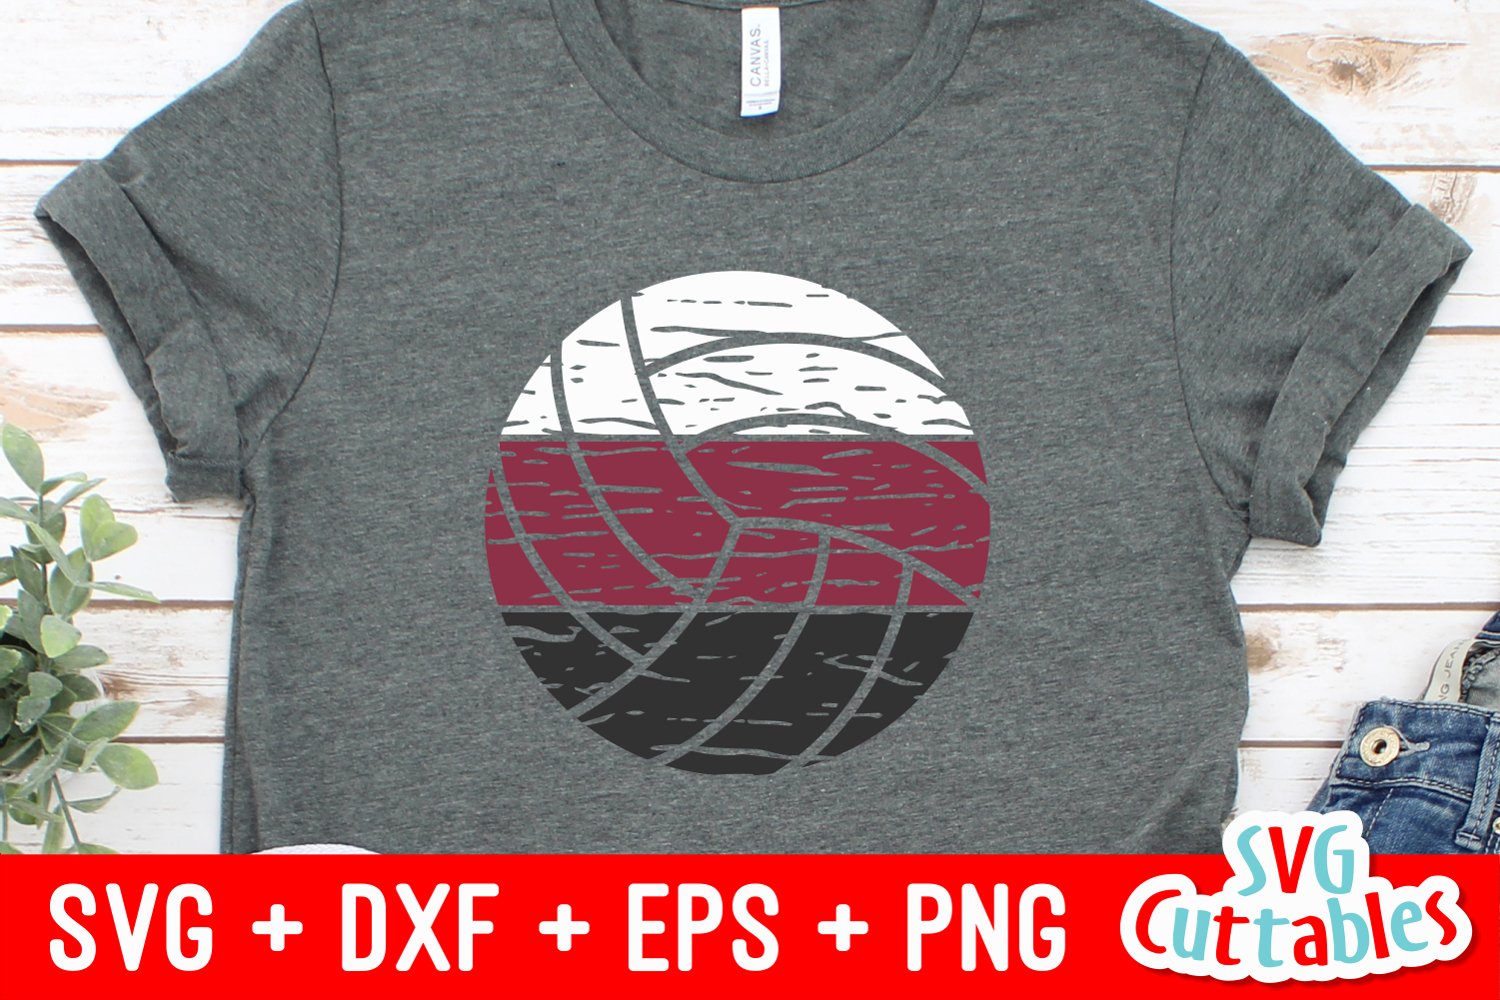 Volleyball logo on t-shirt design.